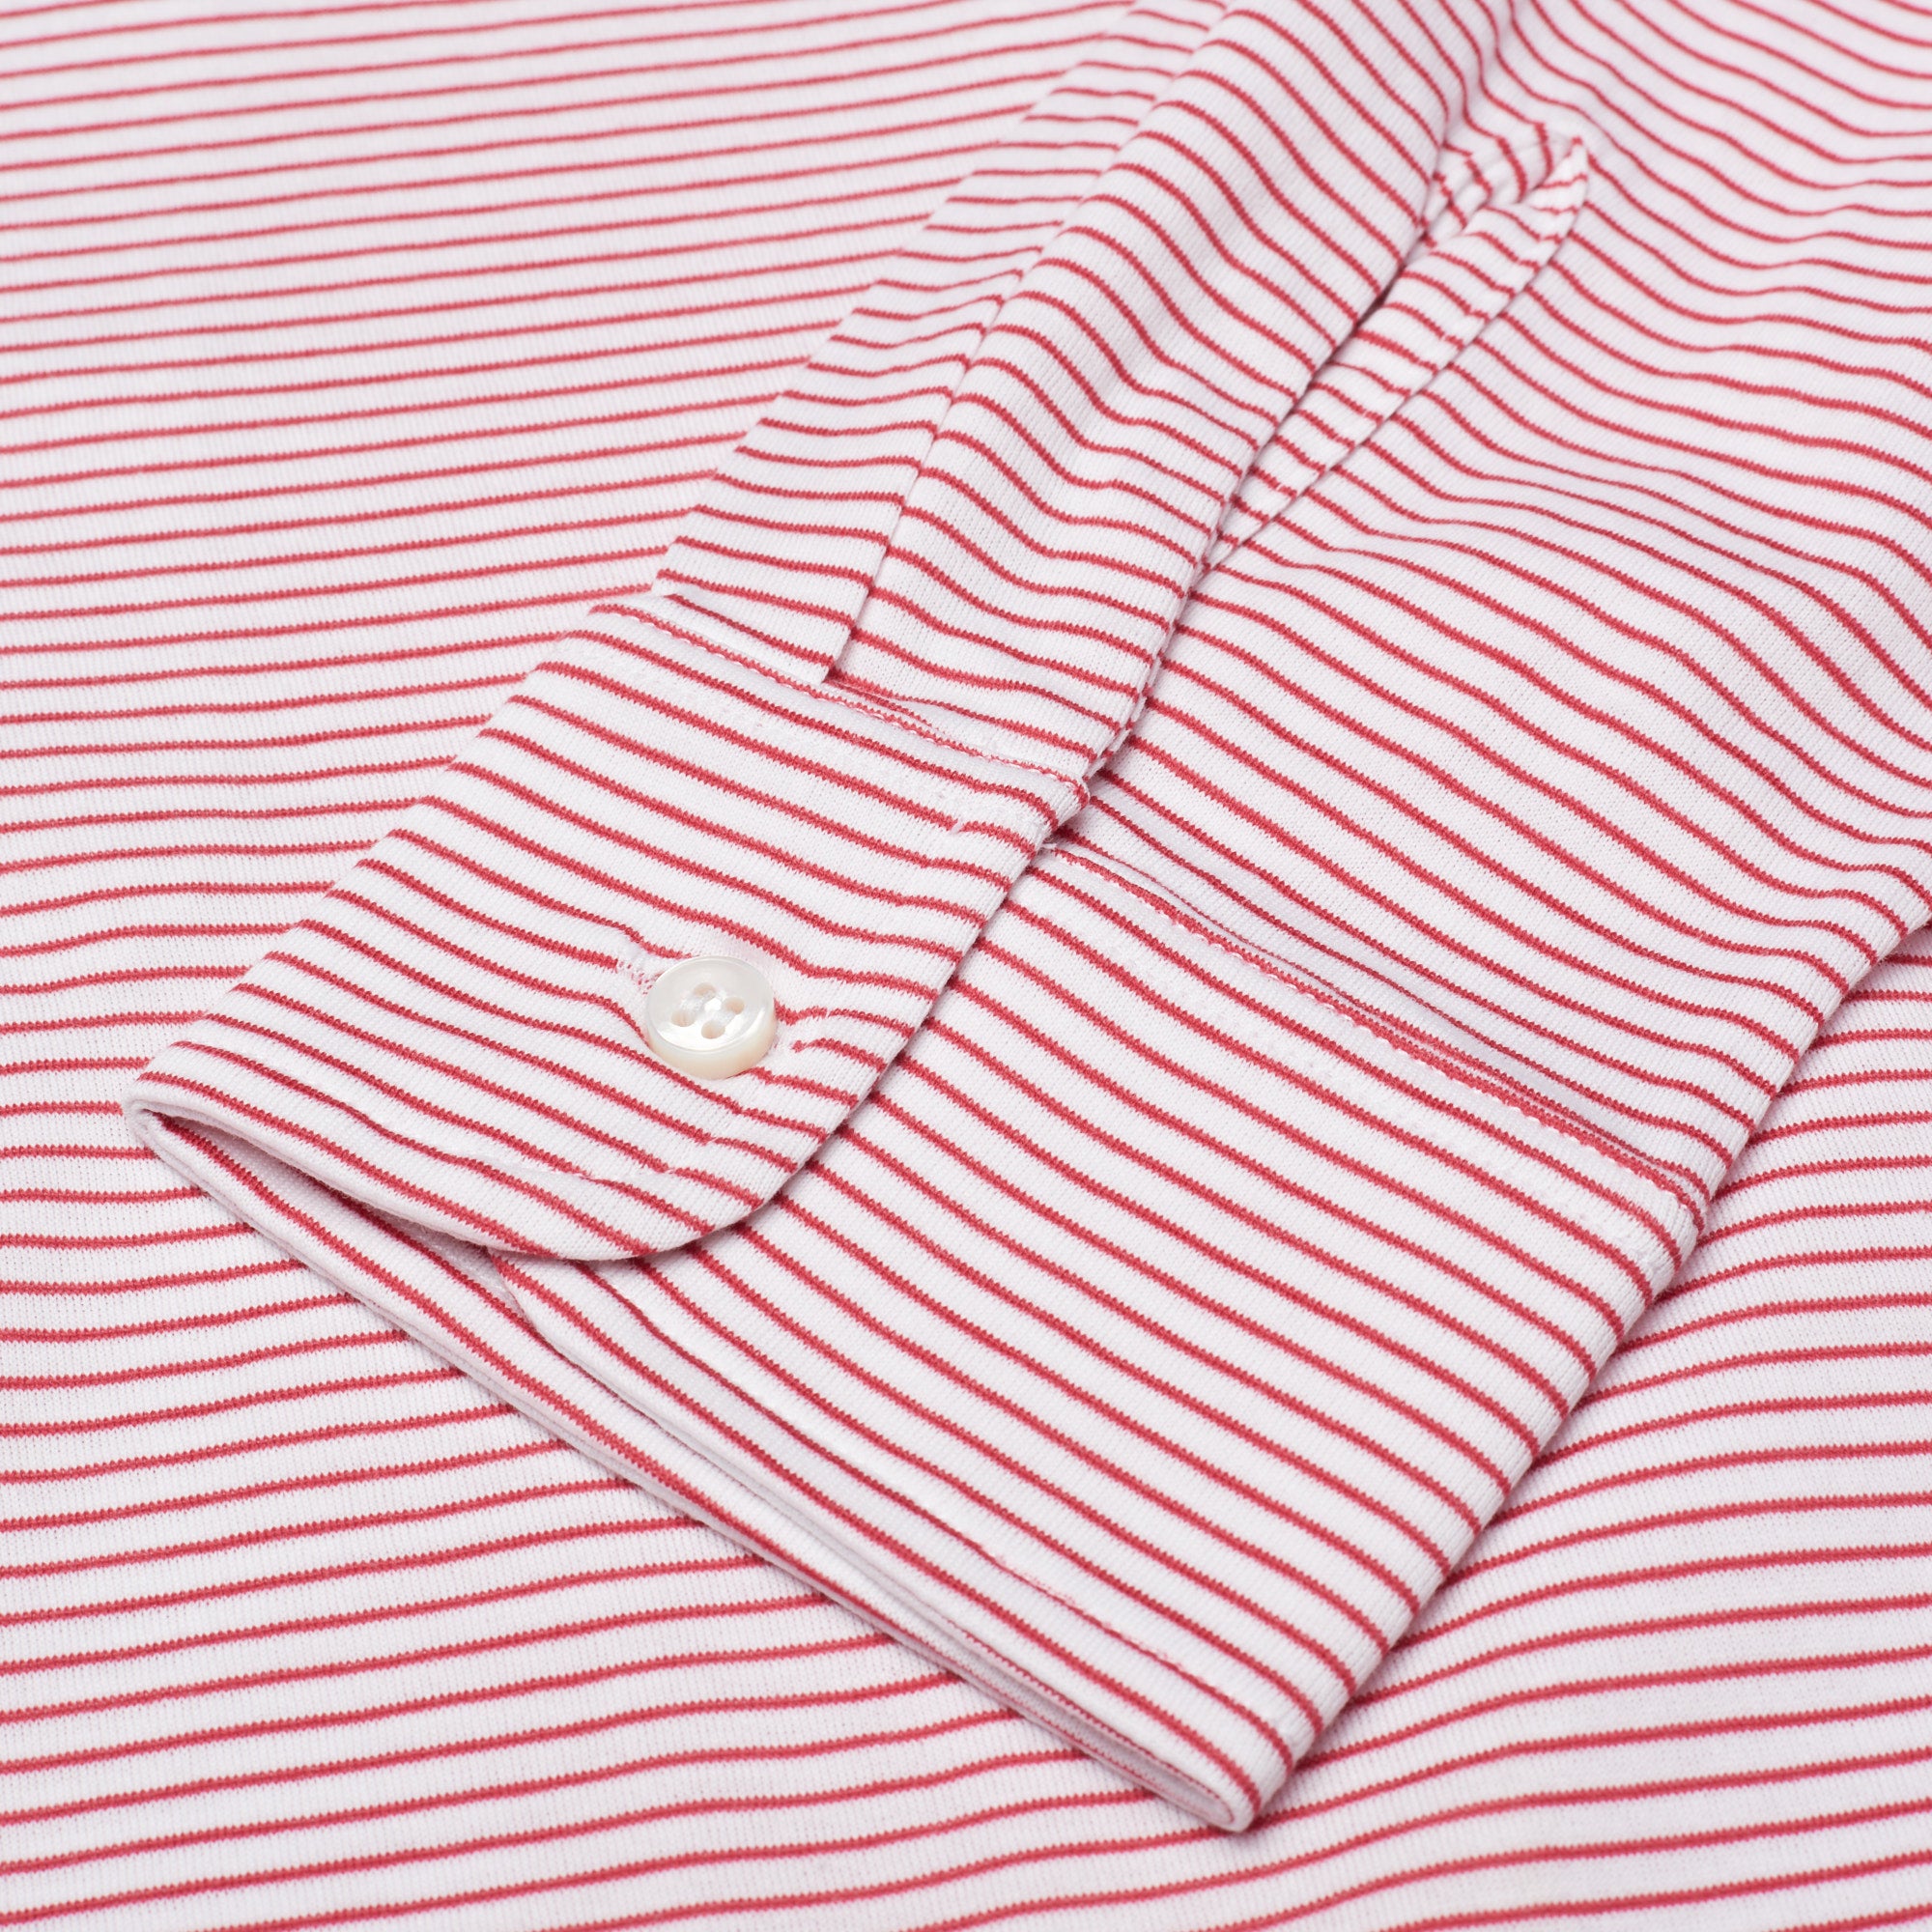 FEDELI "Libeccio" Red Striped Cotton Light Jersey Long Sleeve Polo Shirt NEW FEDELI